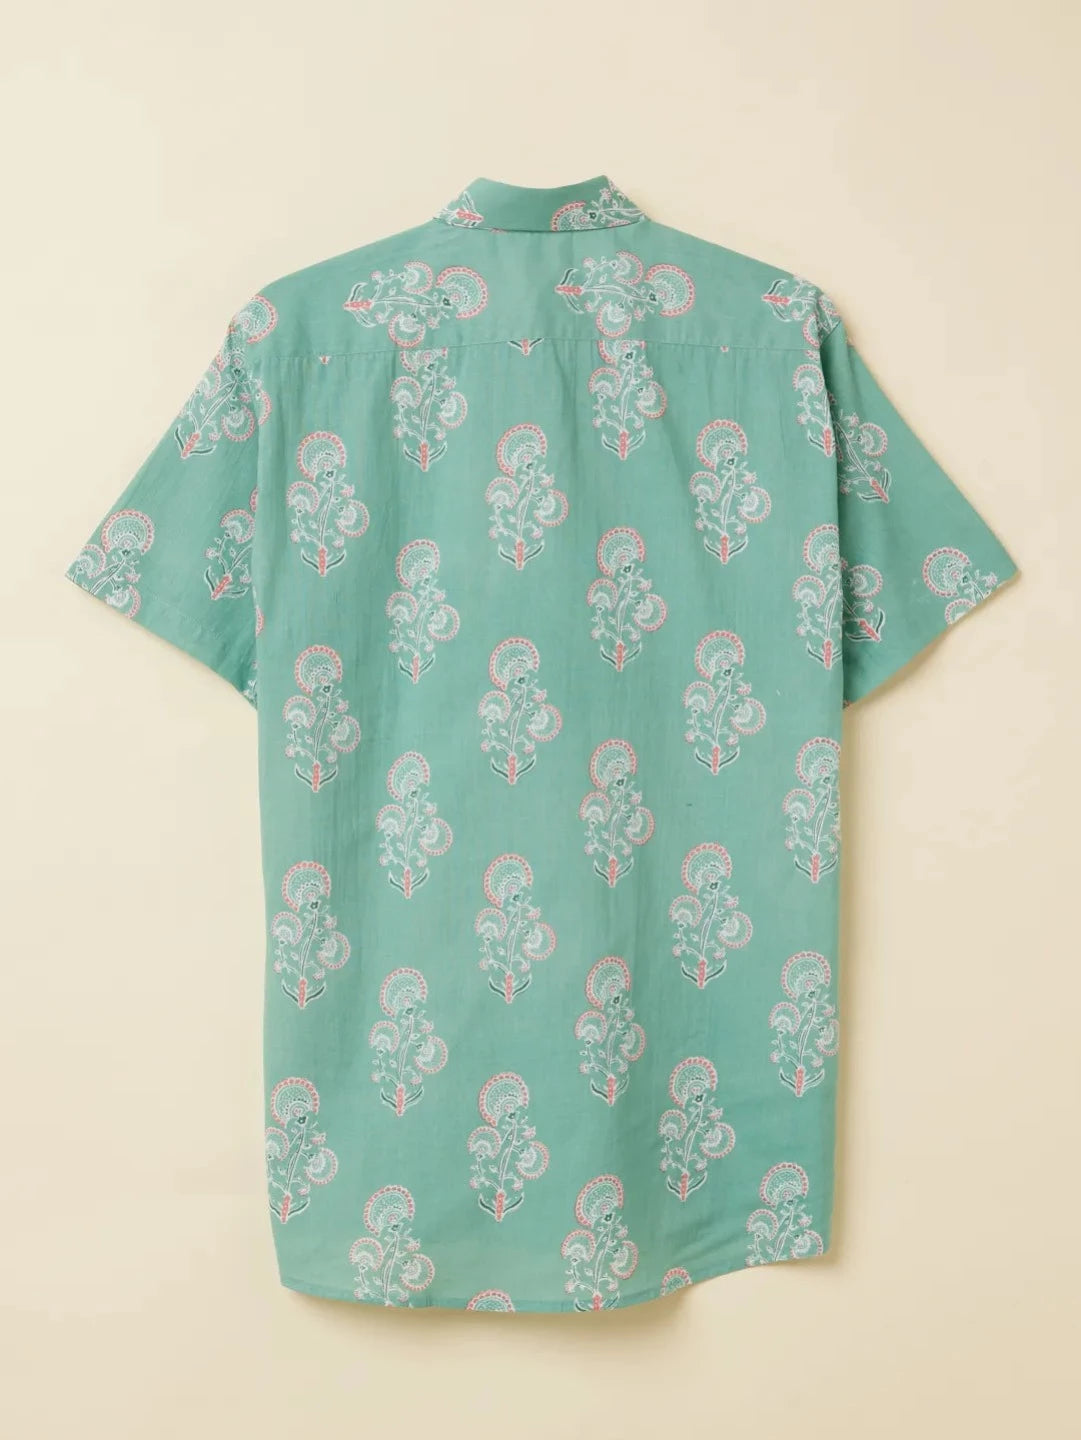 Teal Botanical Flower Printed Shirt